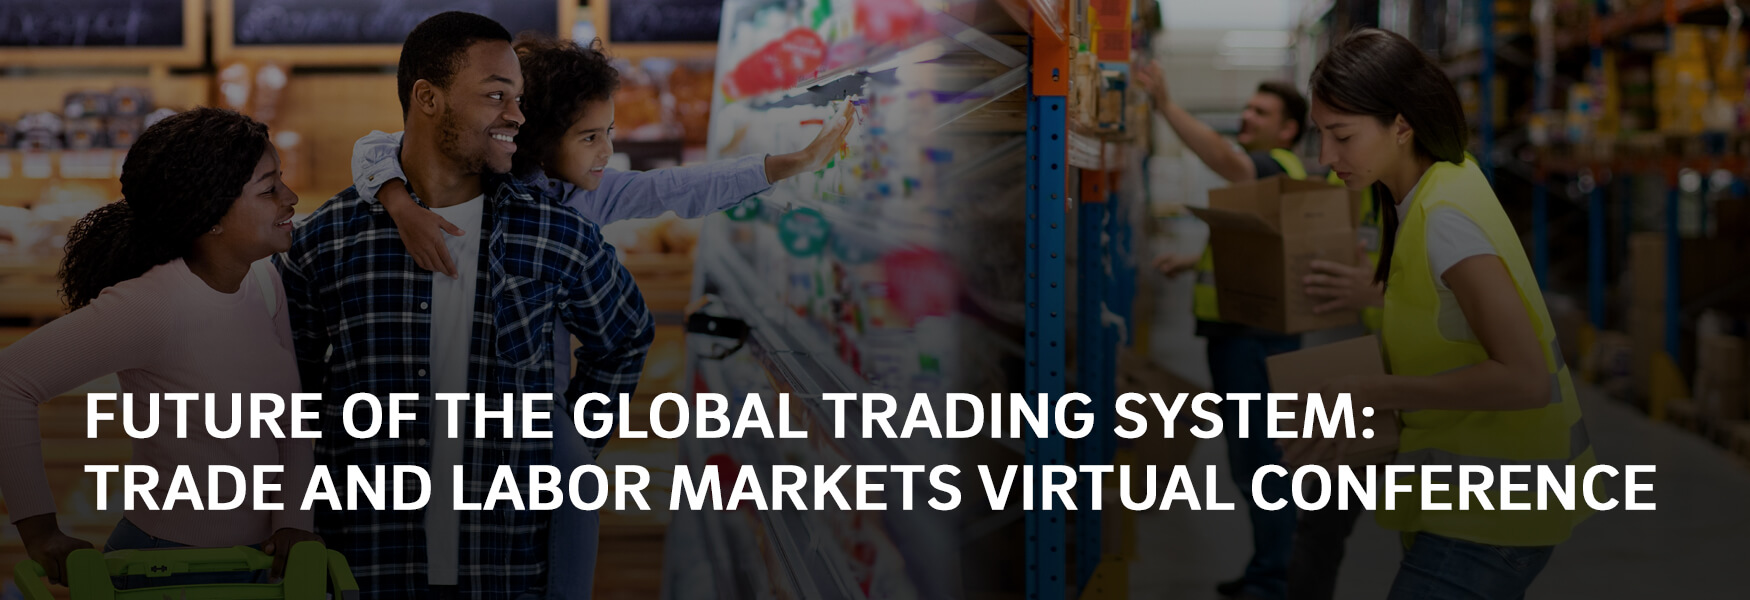 internal-banner_future-of-global-trading-system.jpg